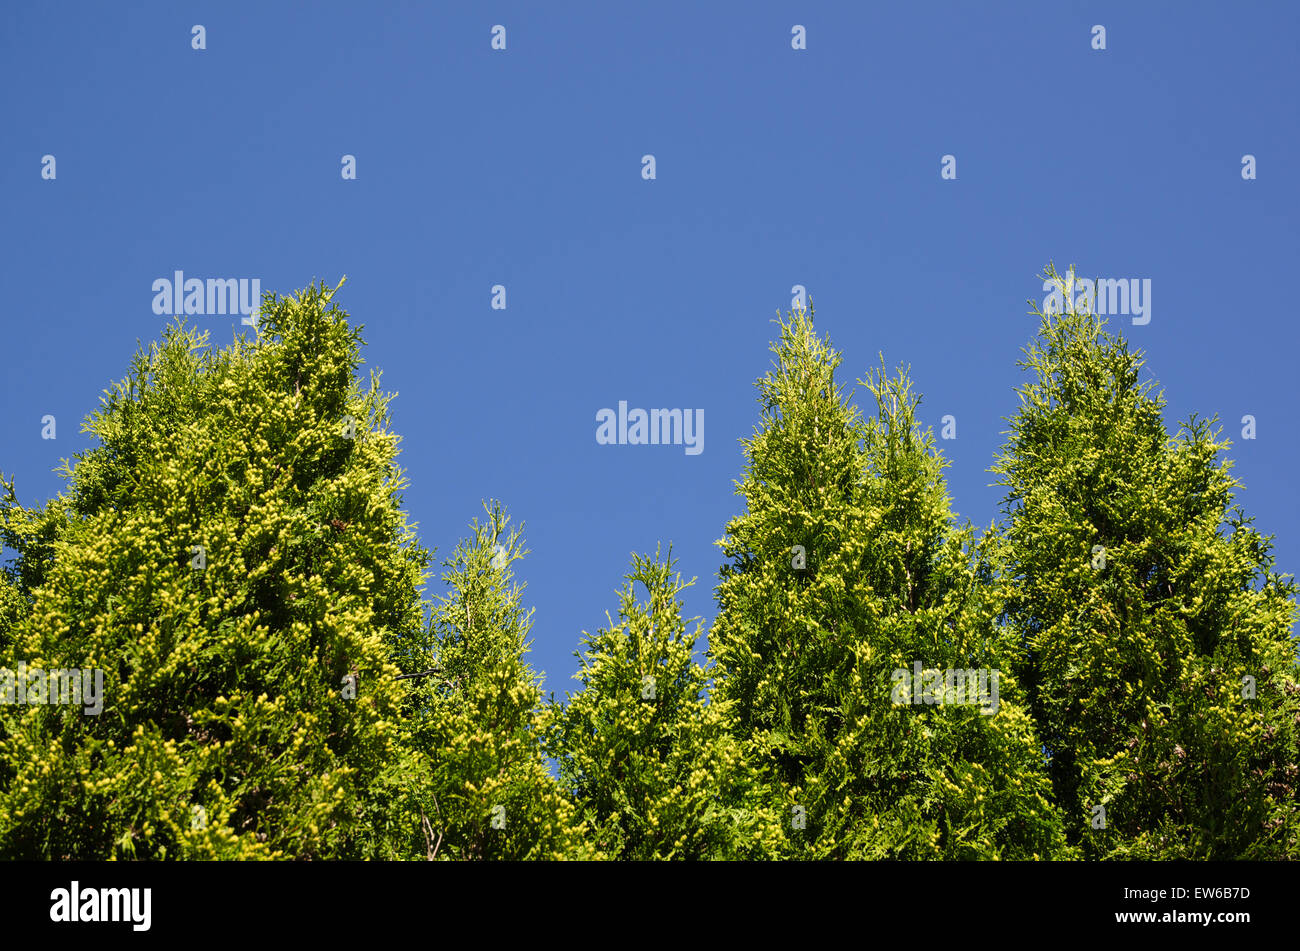 Tall thuja hedge plants at blue sky Stock Photo